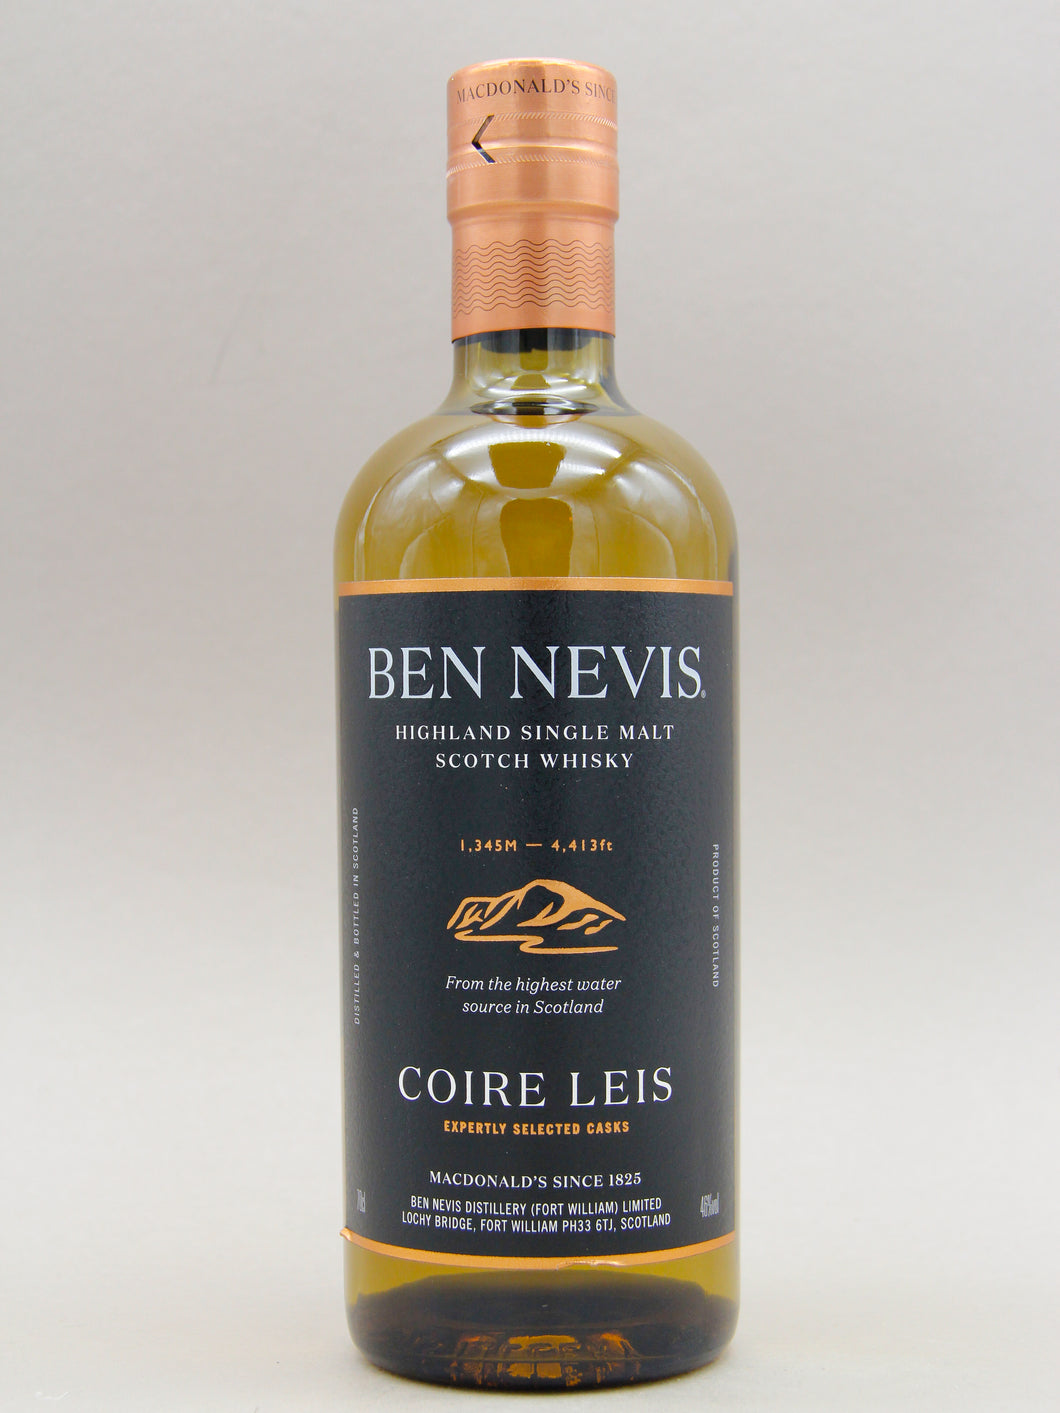 Ben Nevis, Coire Leis, Highland Single Malt Scotch Whisky (46%, 70cl)